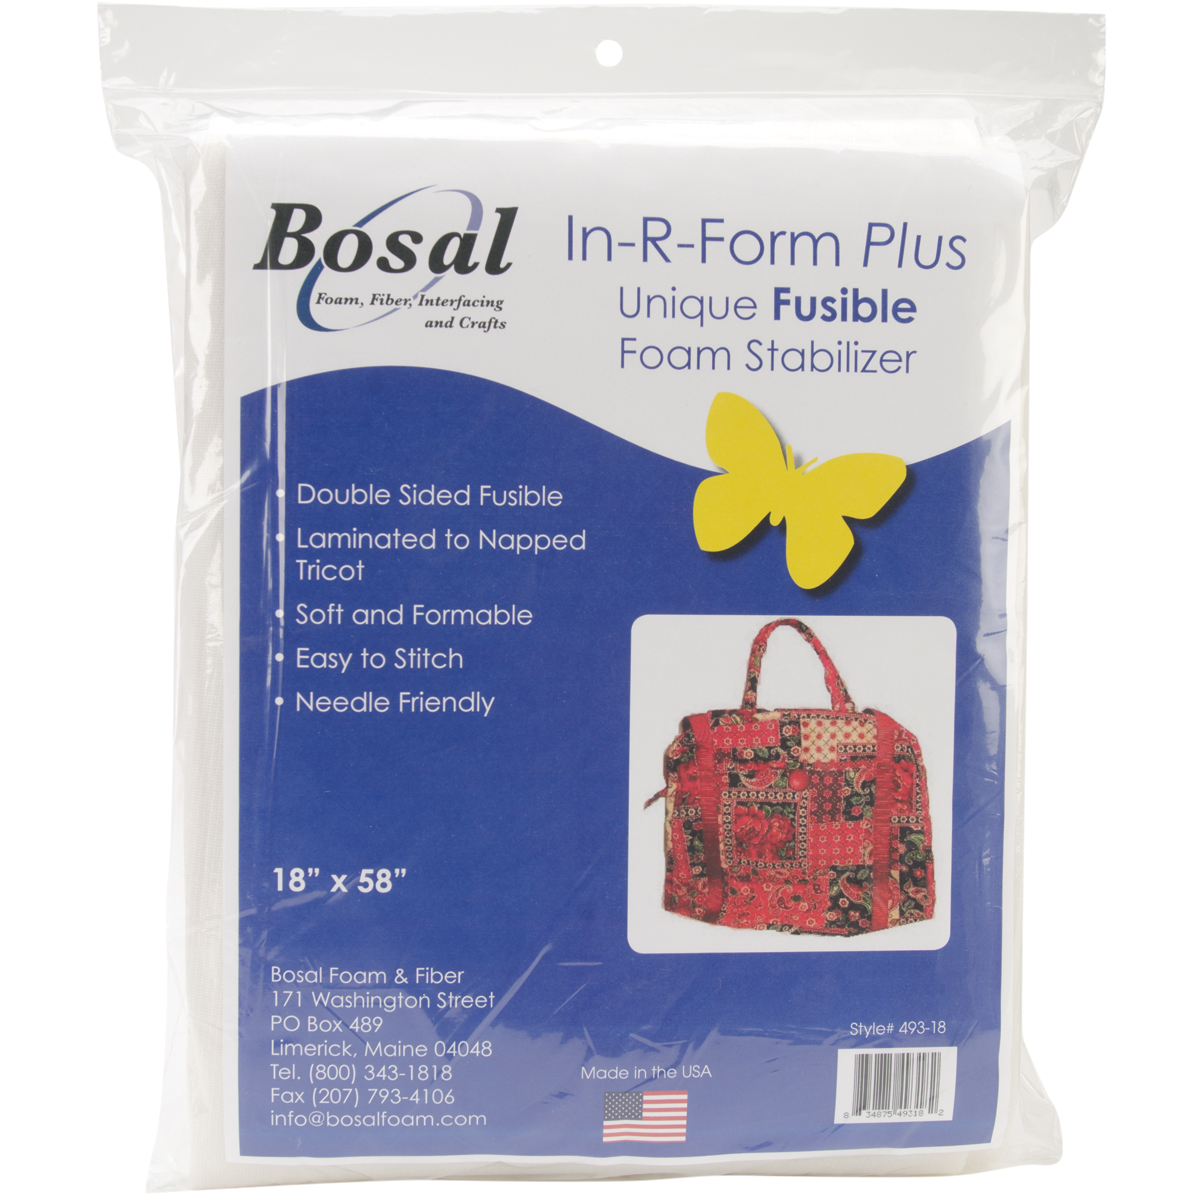 bosal-in-r-form-plus-unique-fusible-foam-stabilizer-18-x58-ebay